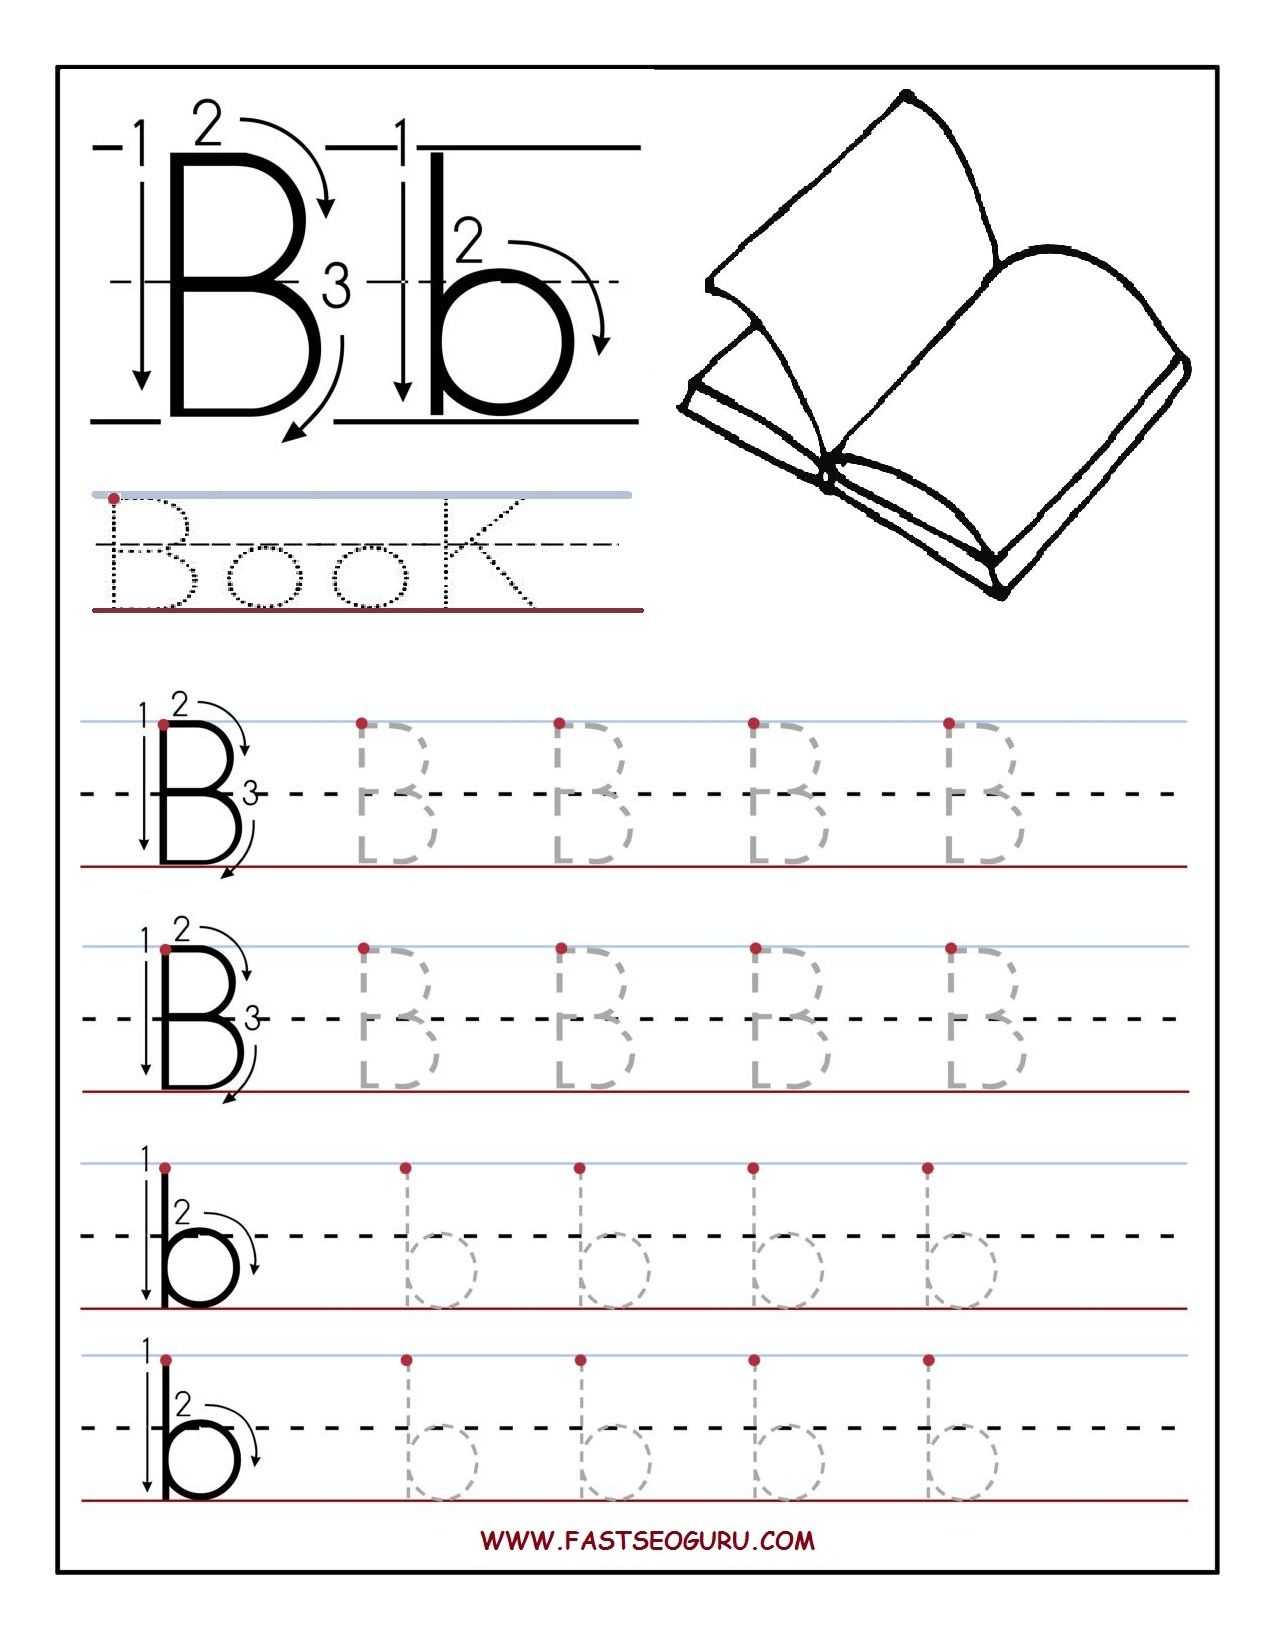 Alphabet Worksheets for Grade 1 as Well as Delightful Letter D Preschool Worksheets 10 11 Paper Crafts